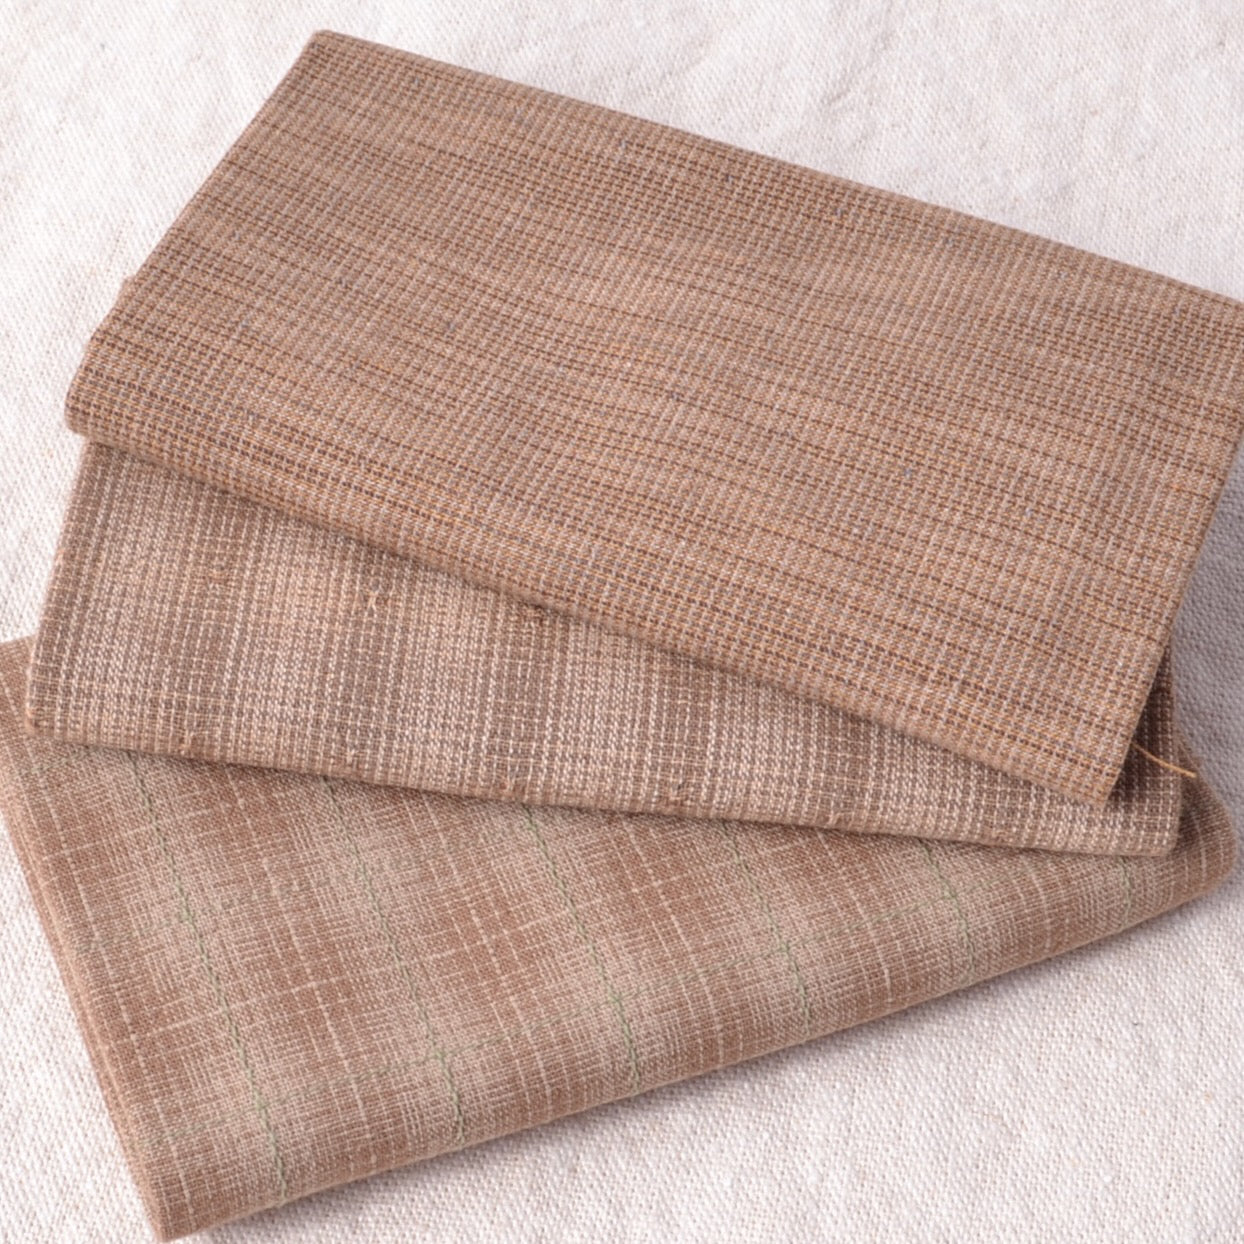 Dyed Yarn Cotton Fabric Bundle of 3, Warm Brown